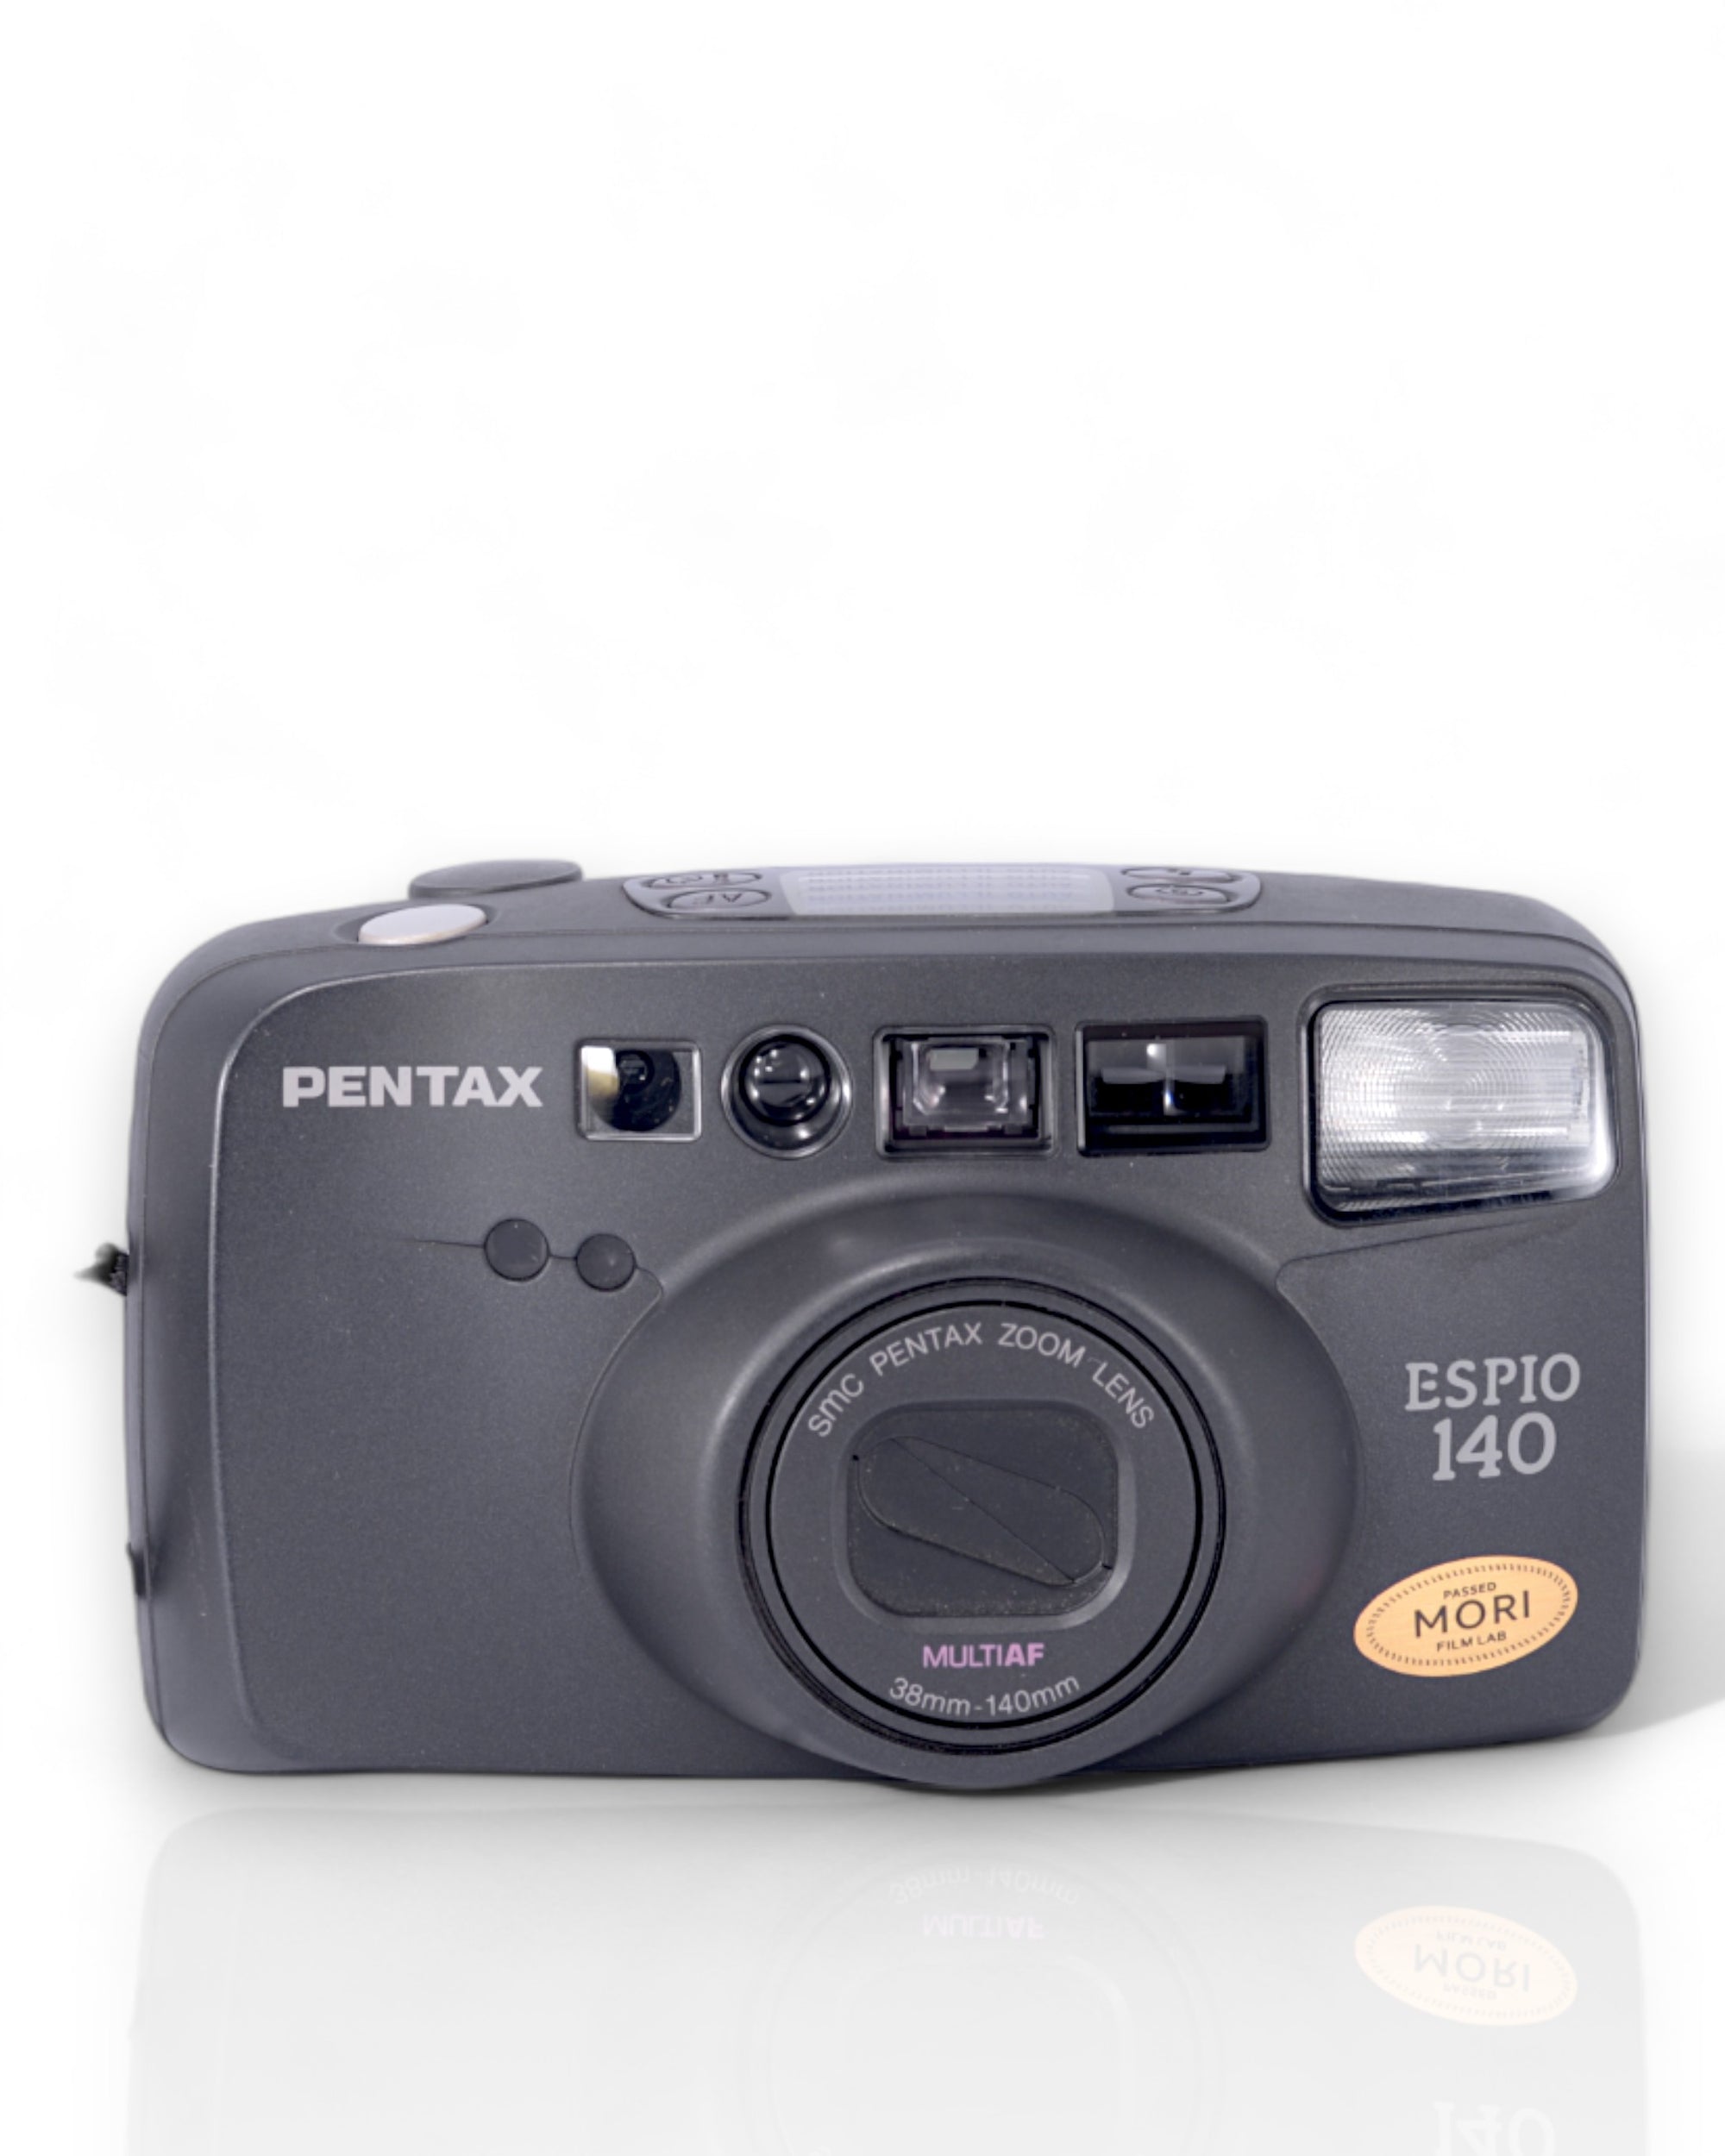 Pentax Espio 140 35mm Point & Shoot film camera with 38-140mm zoom lens